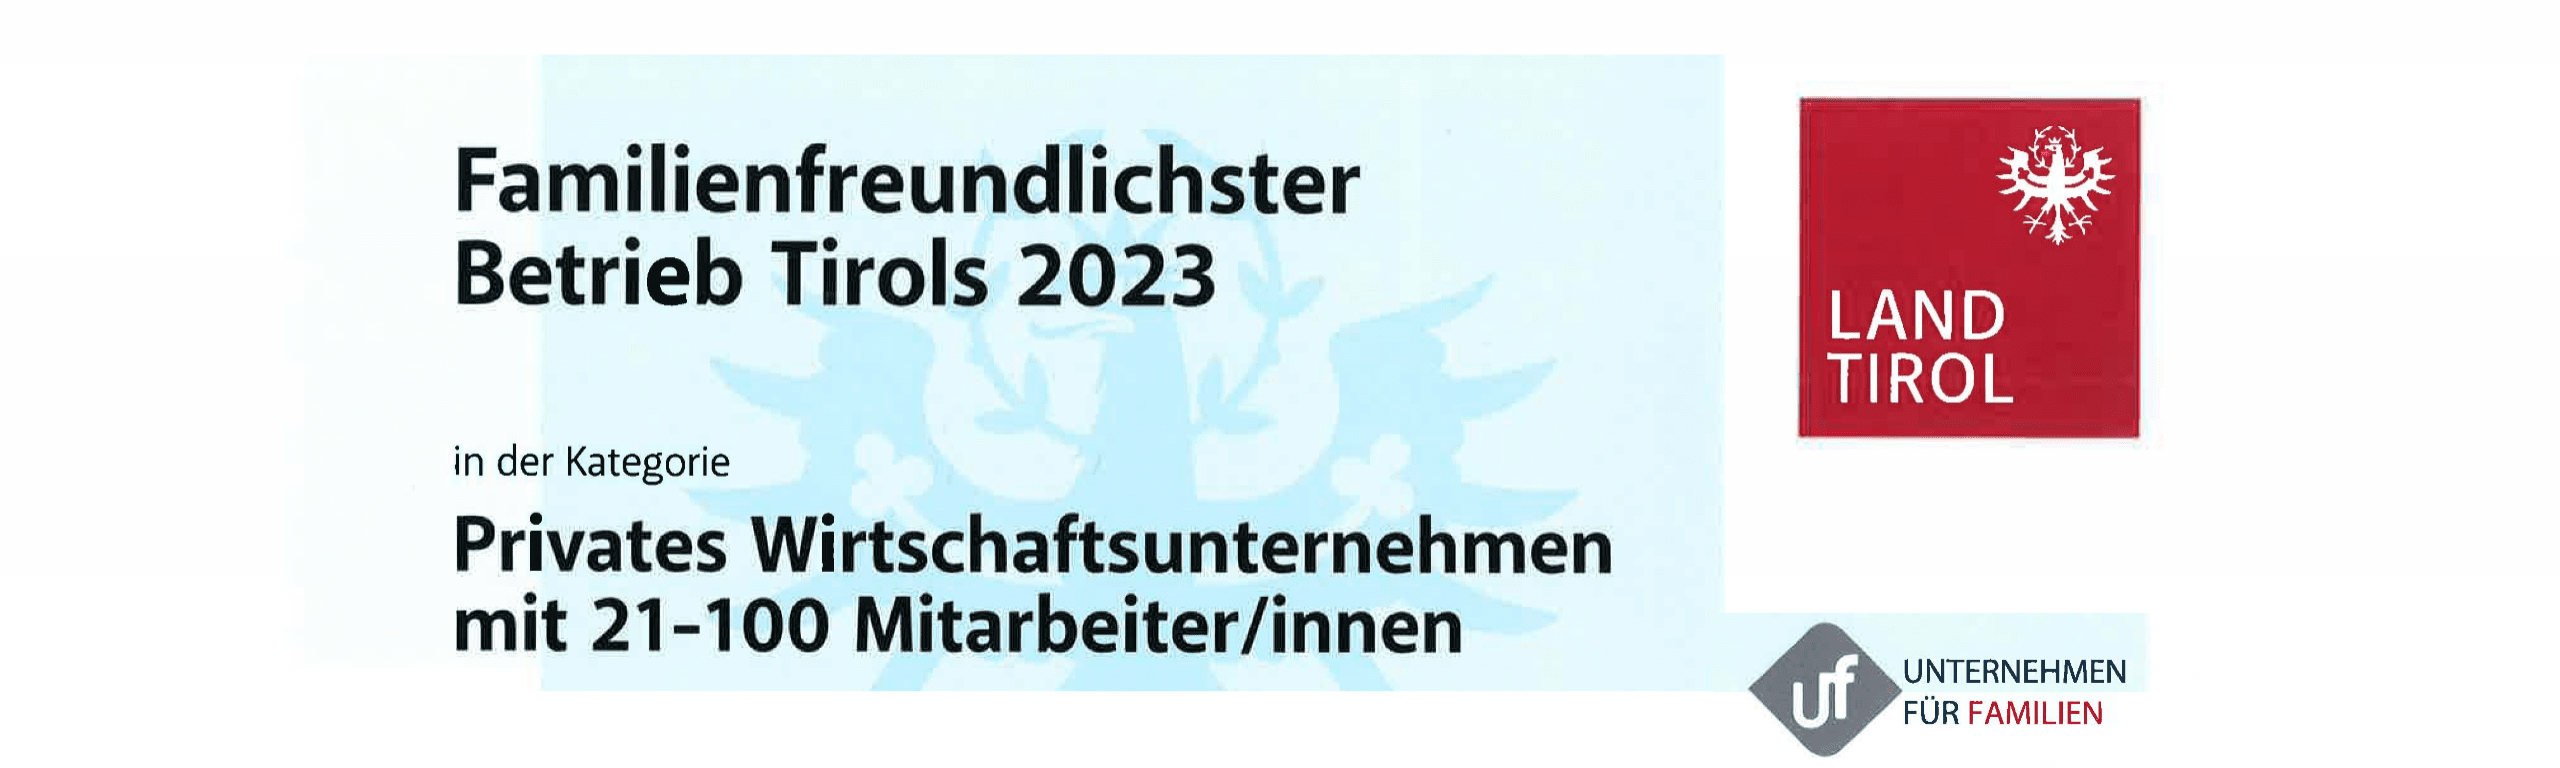 Familienfreundlichster Betrieb Tirols 2023